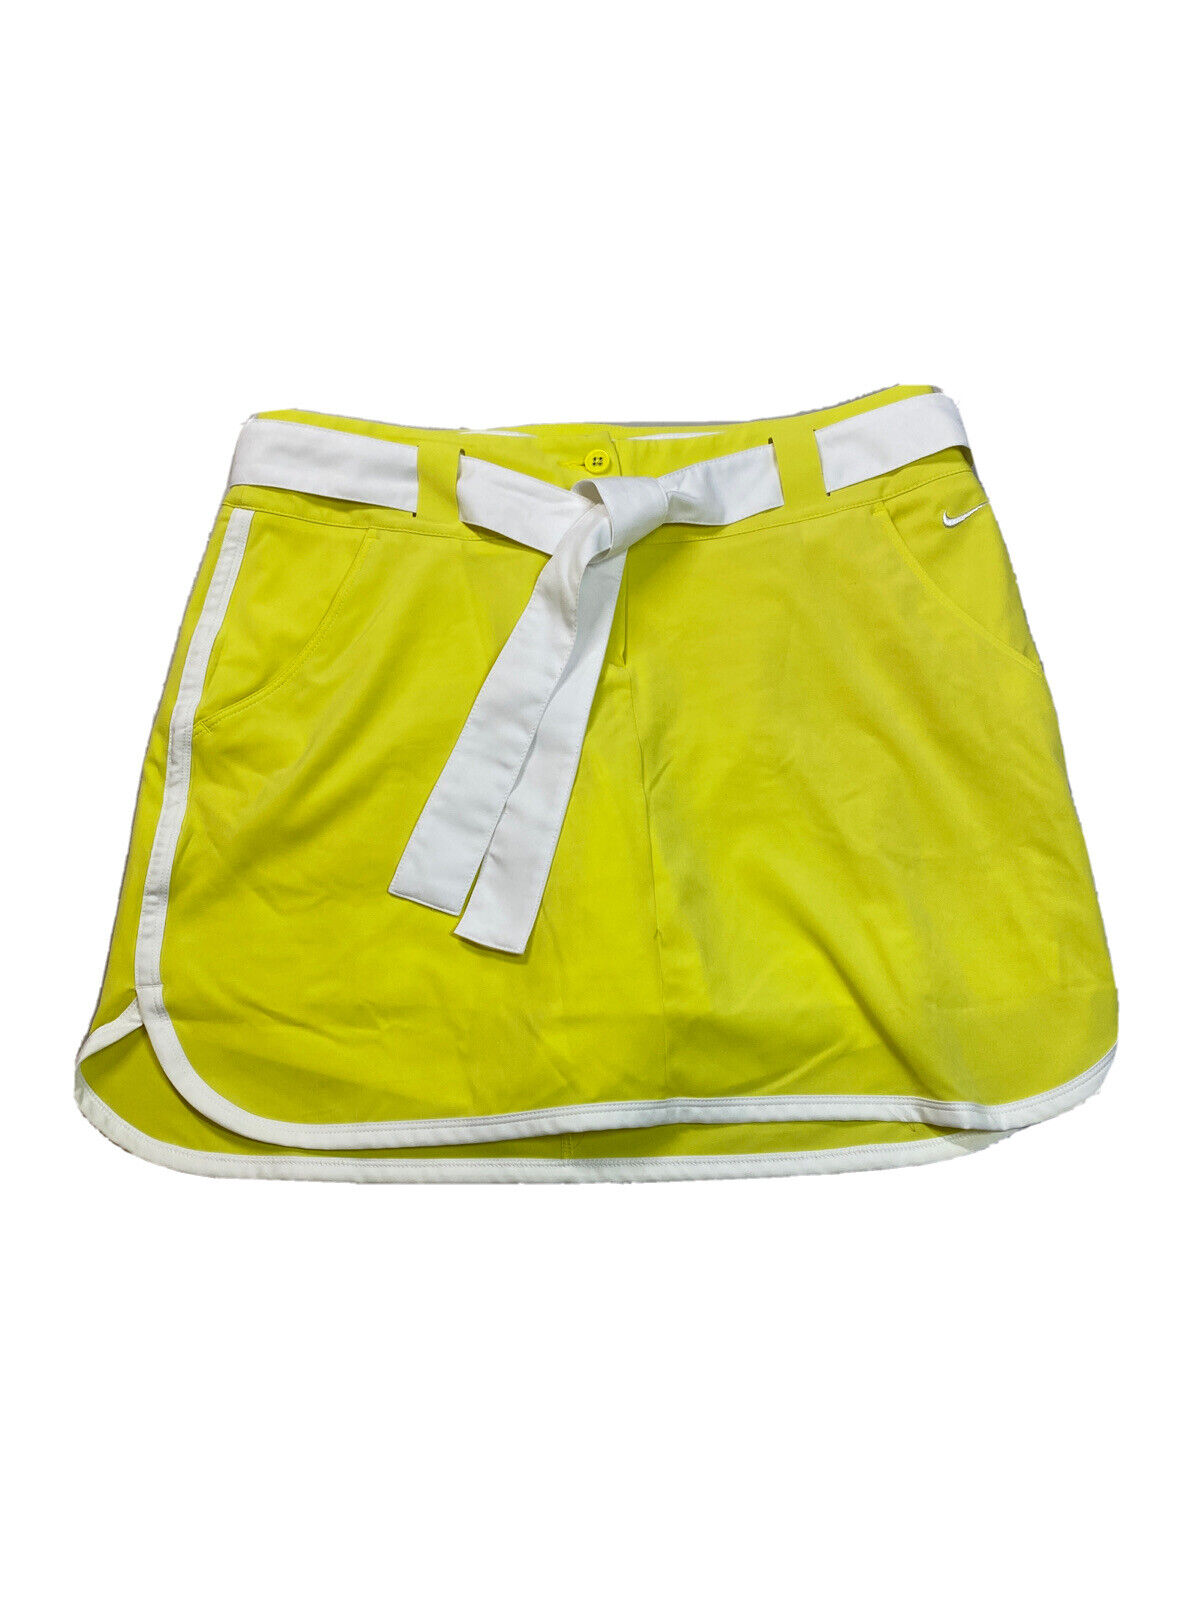 Falda pantalón deportiva Nike Tour Performance amarilla para mujer 508274 - 8 con cinturón